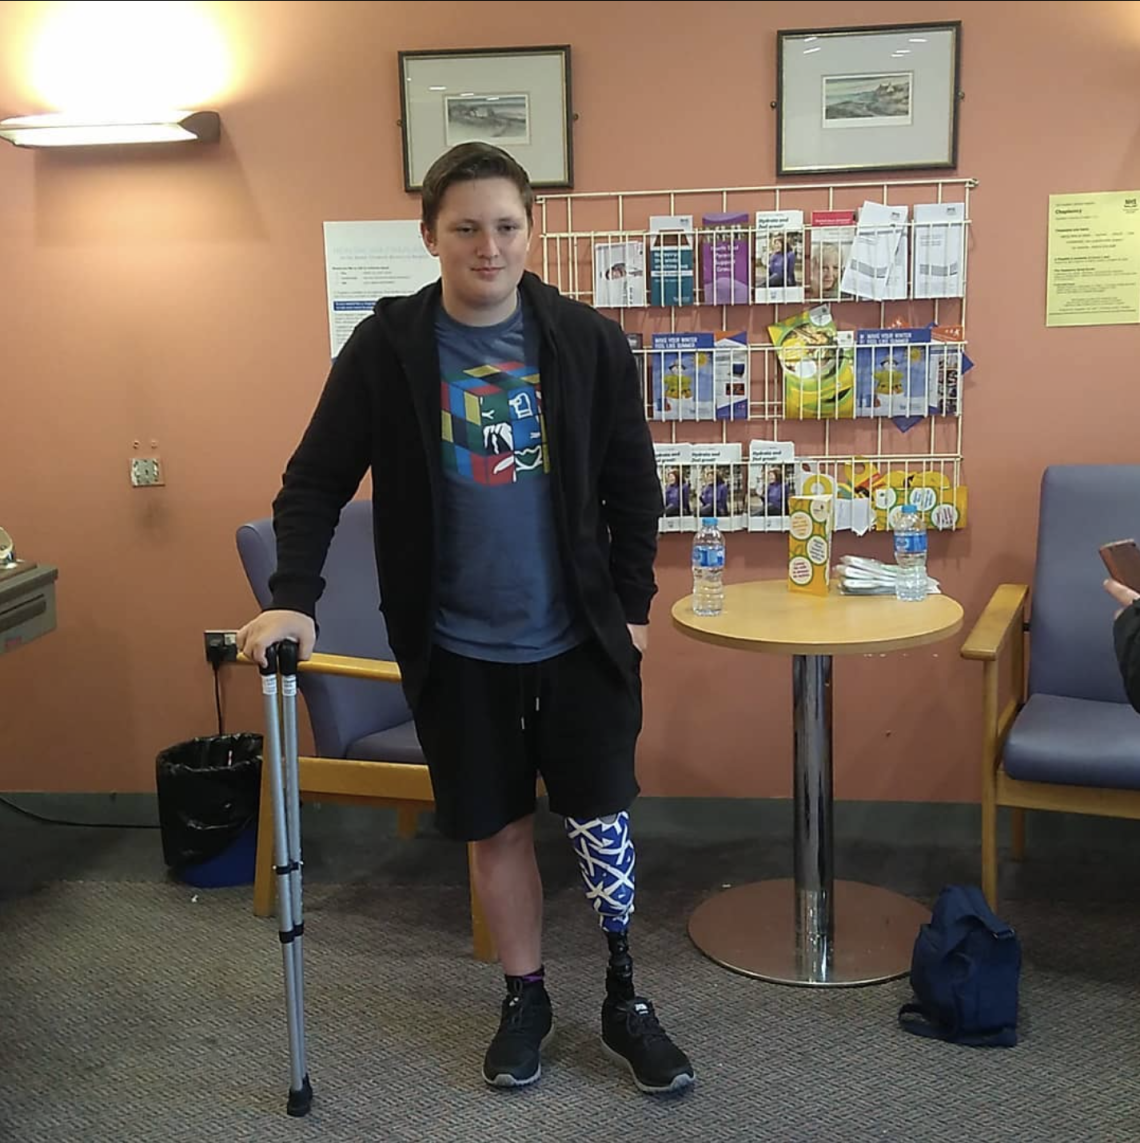 Cameron Radigan leaving hospital after surgery.